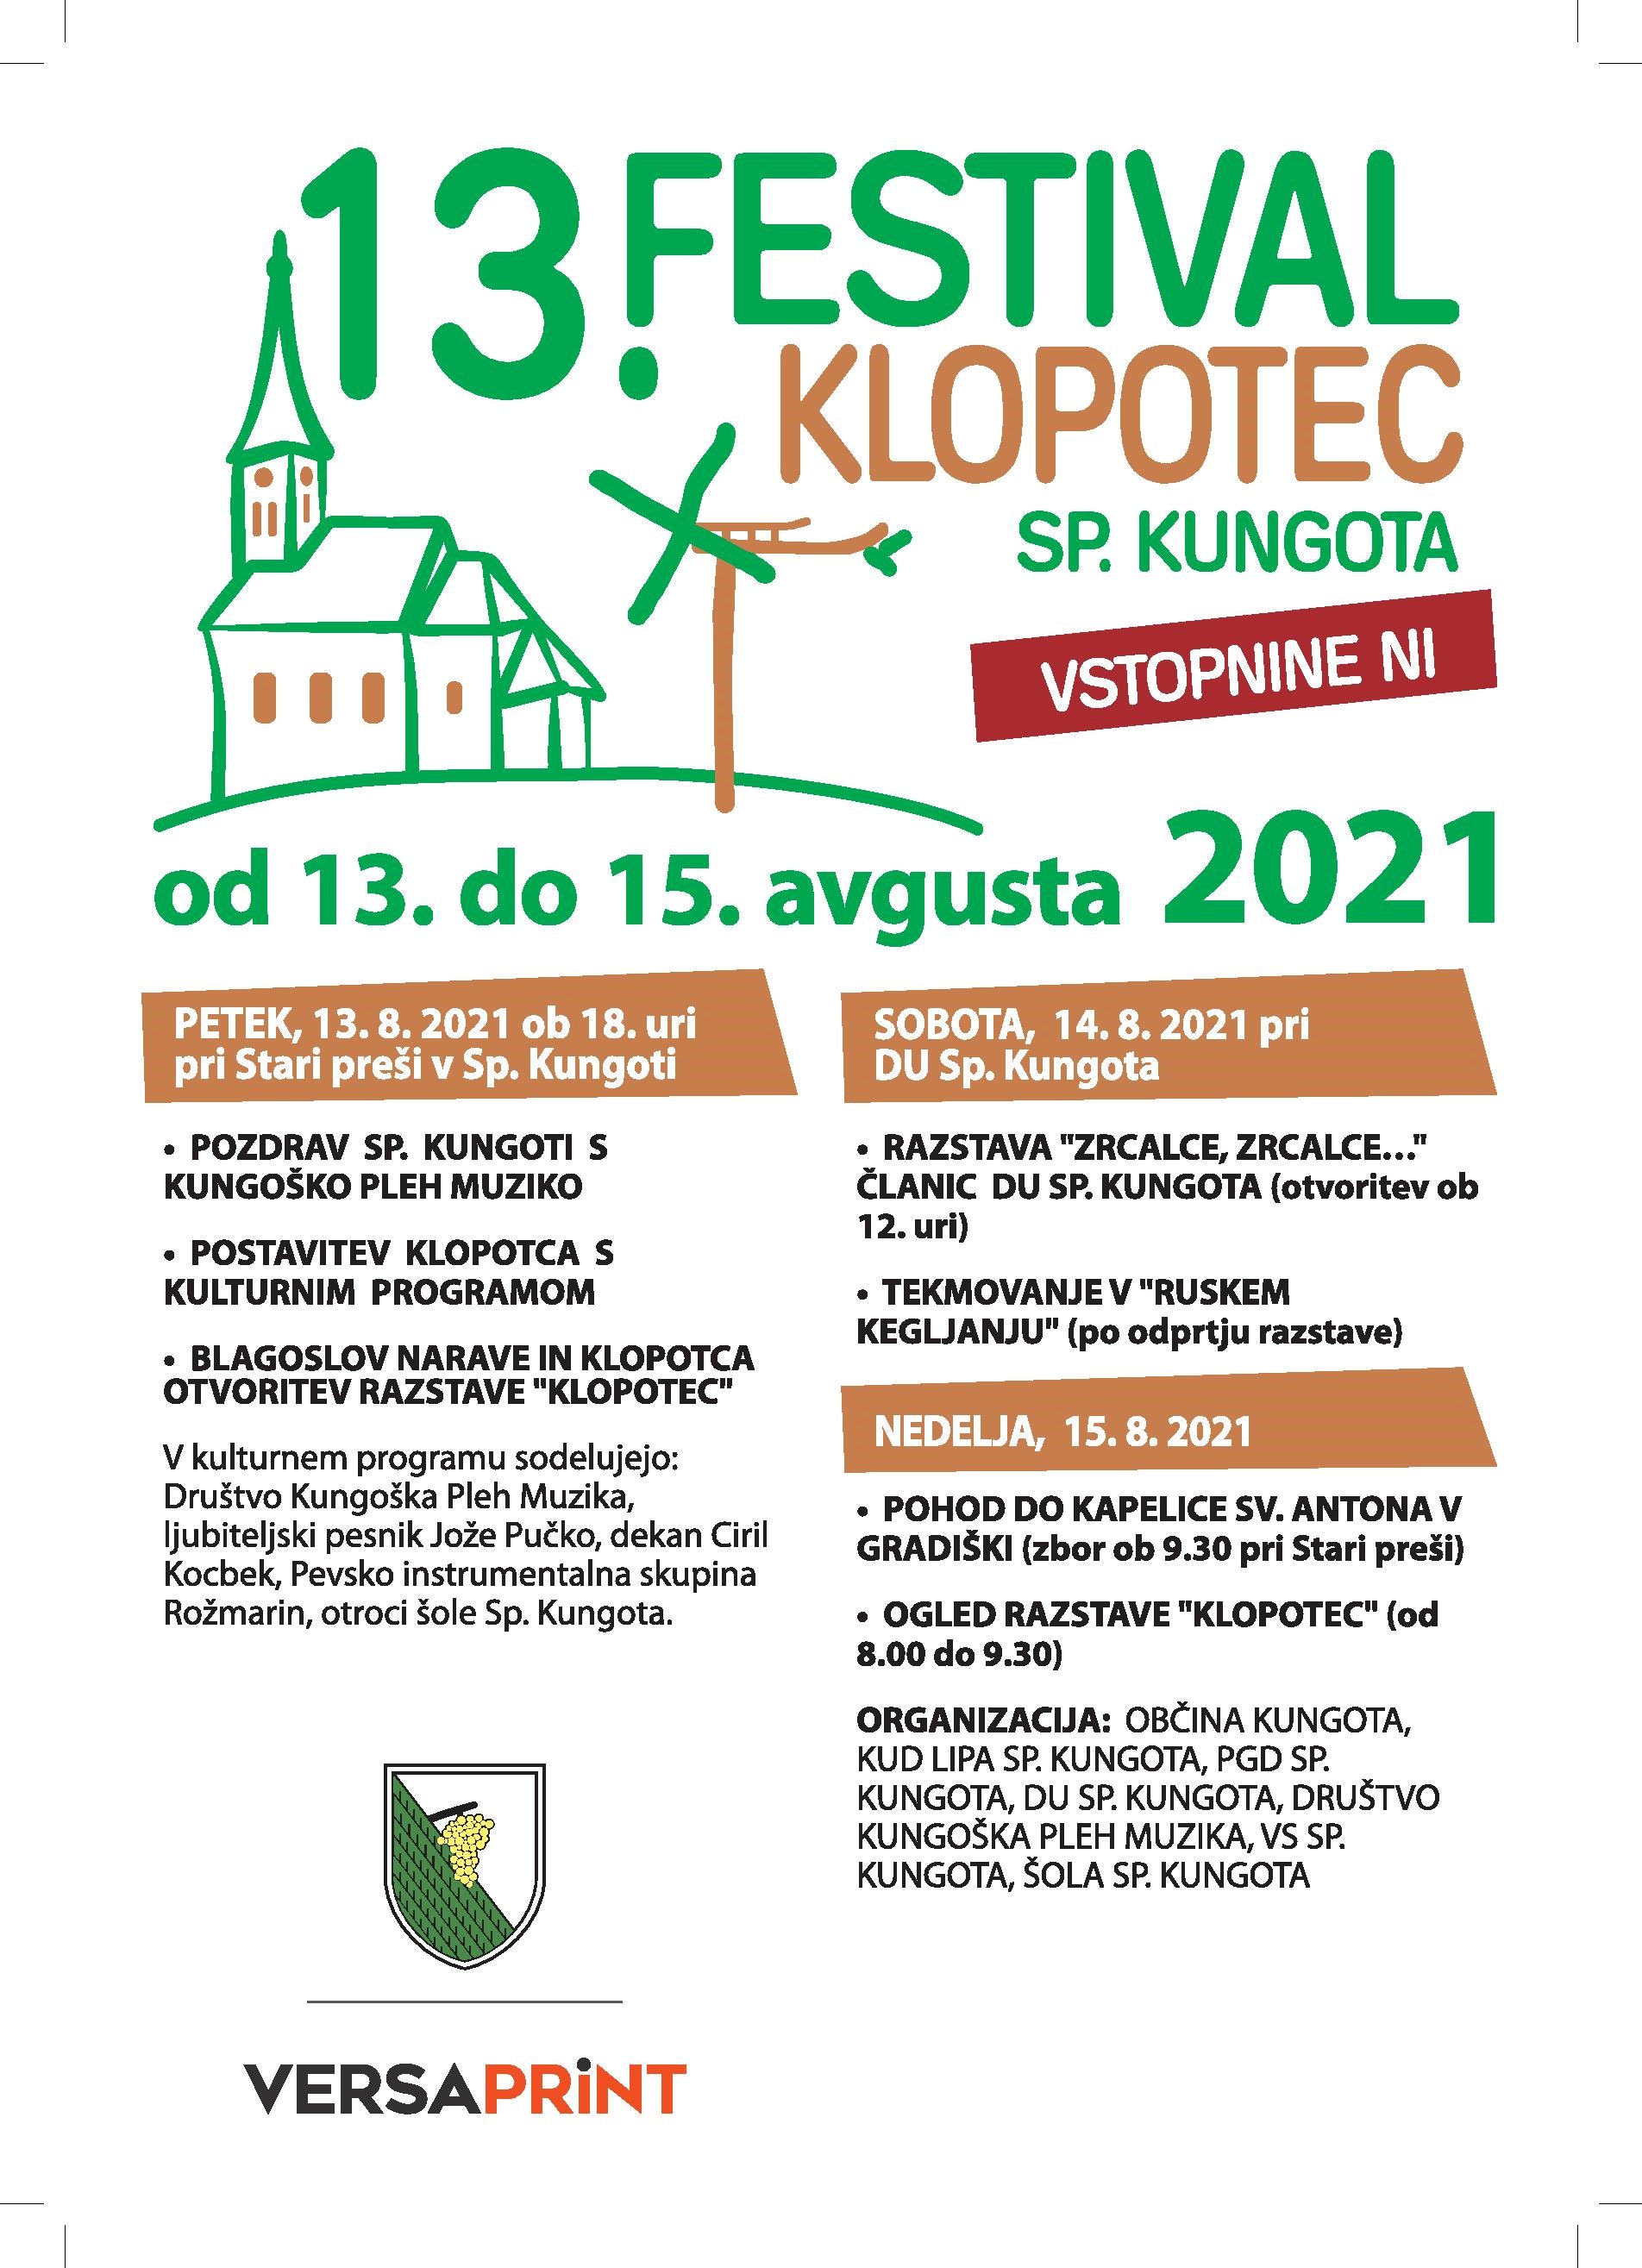 KudLipa_plakat-13.festival-klopotec_A3-page-001.jpg